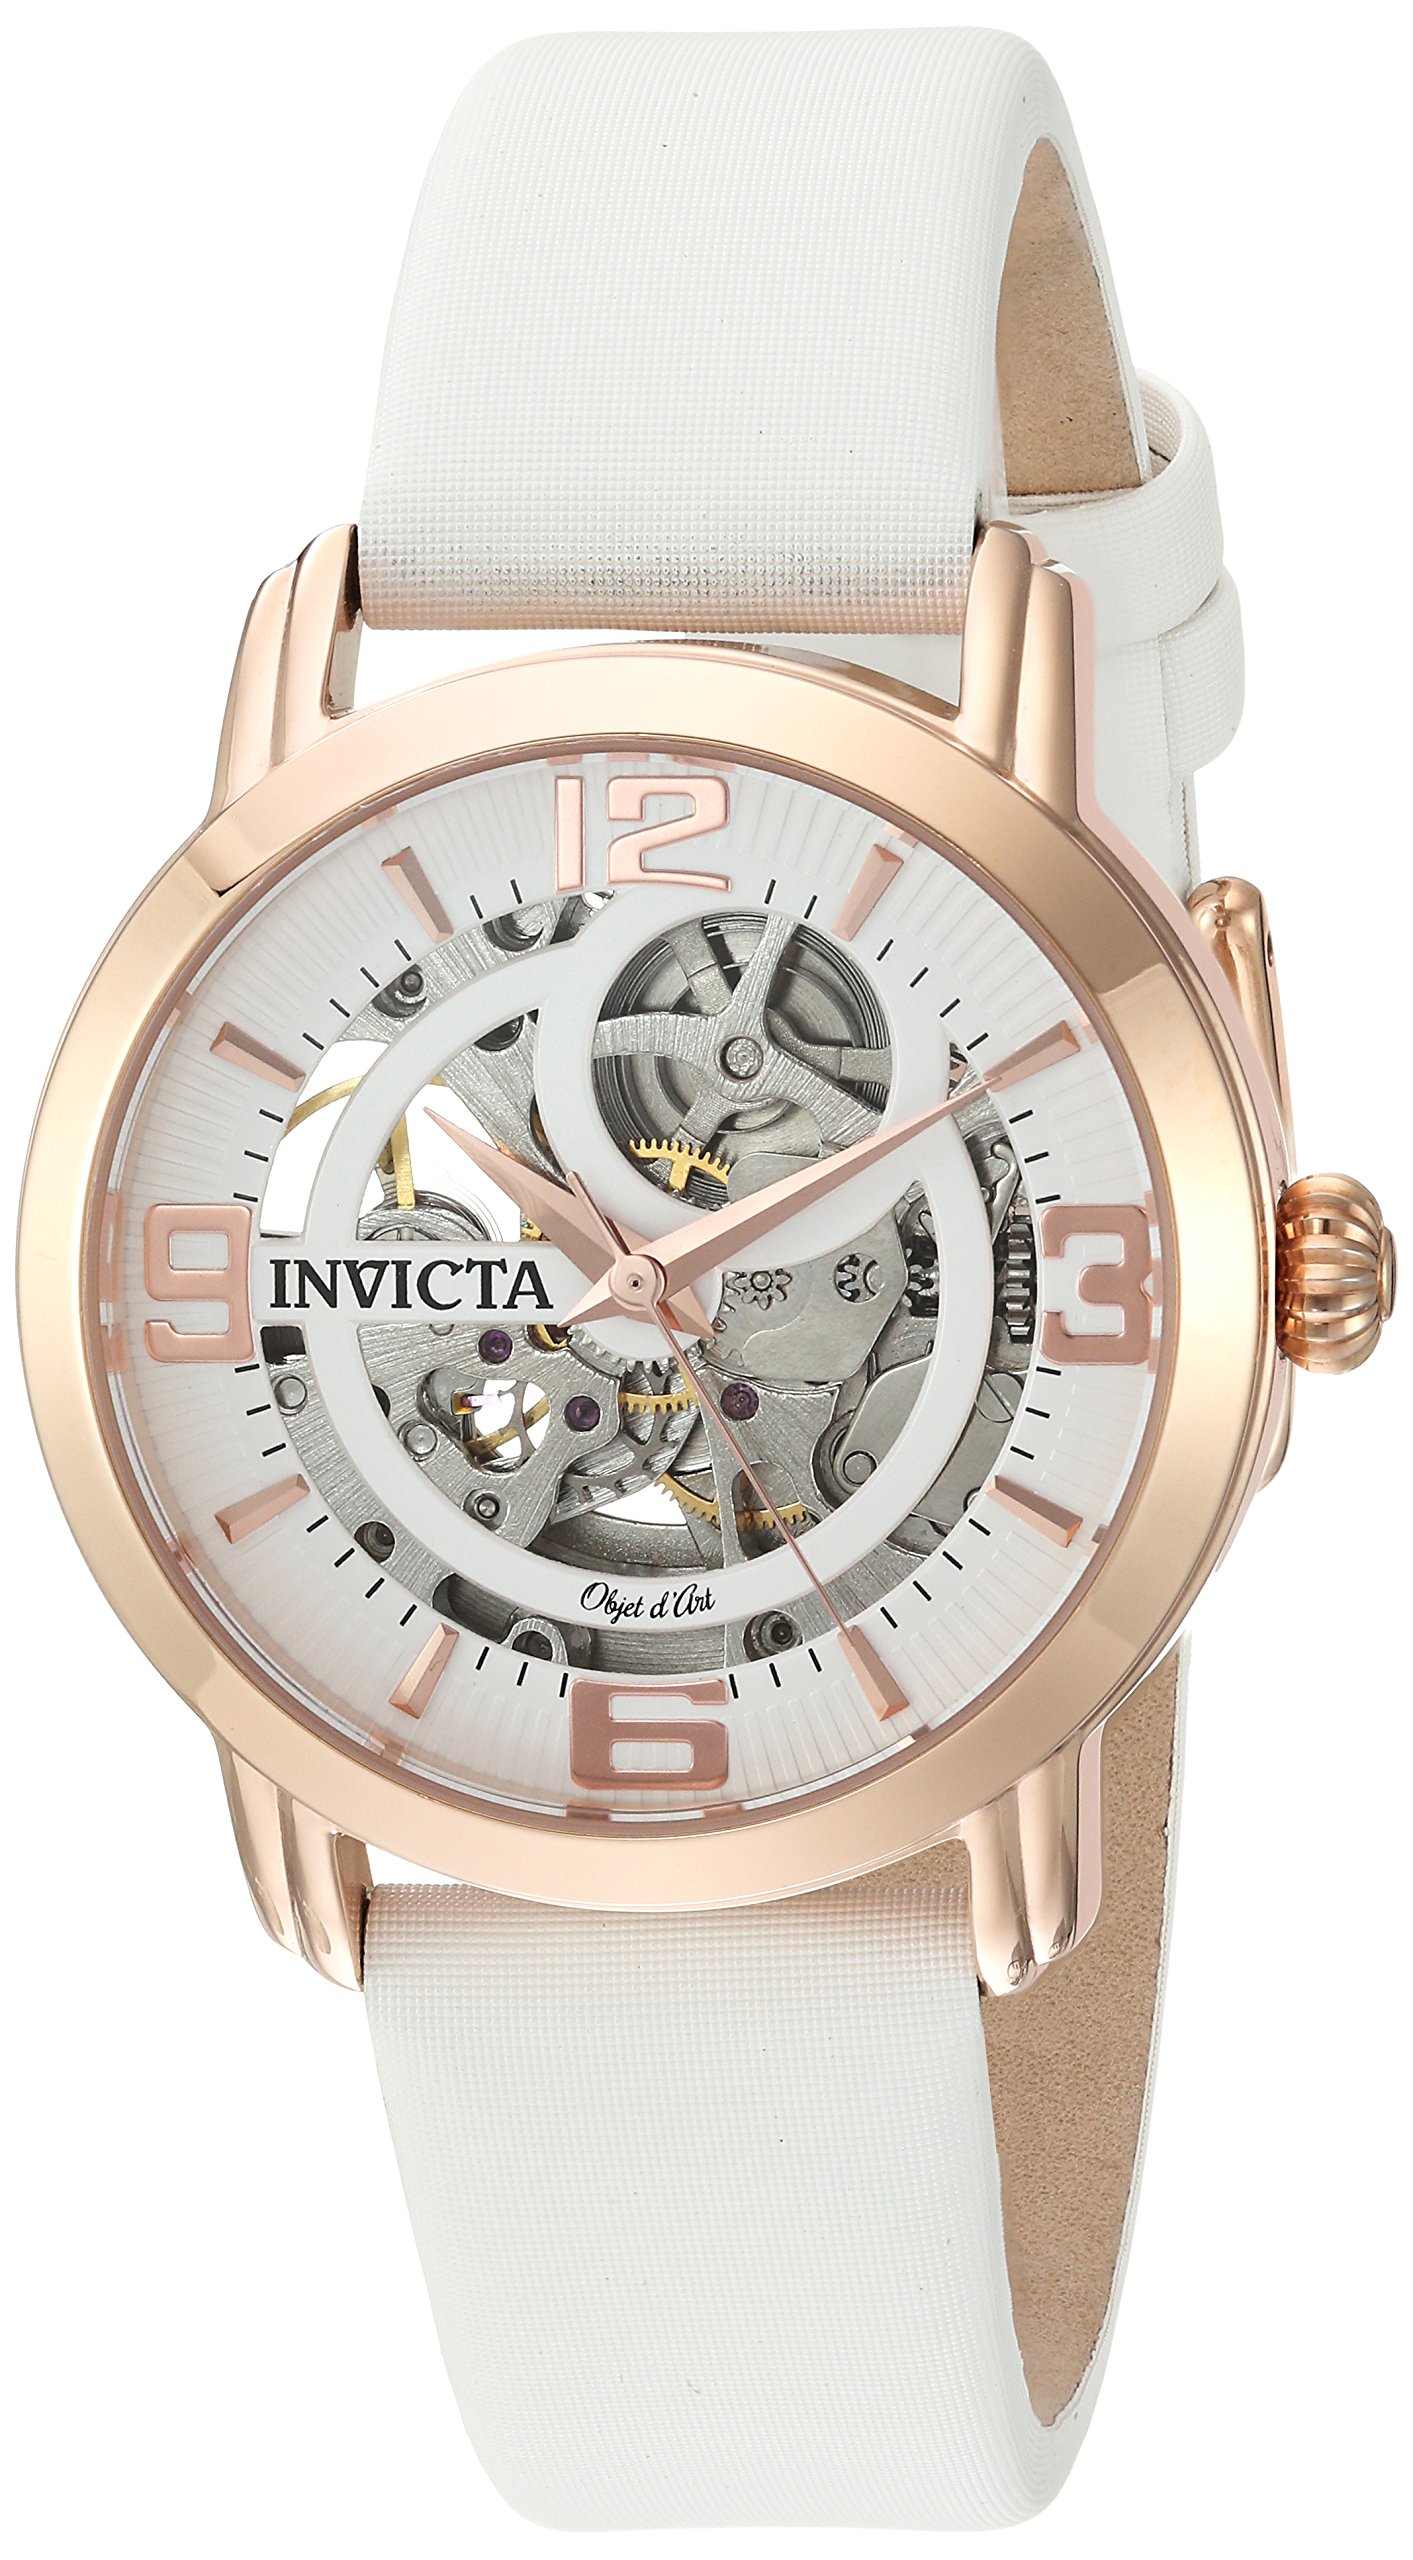 Invicta Women's 22655 Objet d'Art Analog Display Automatic Self Wind White Watch